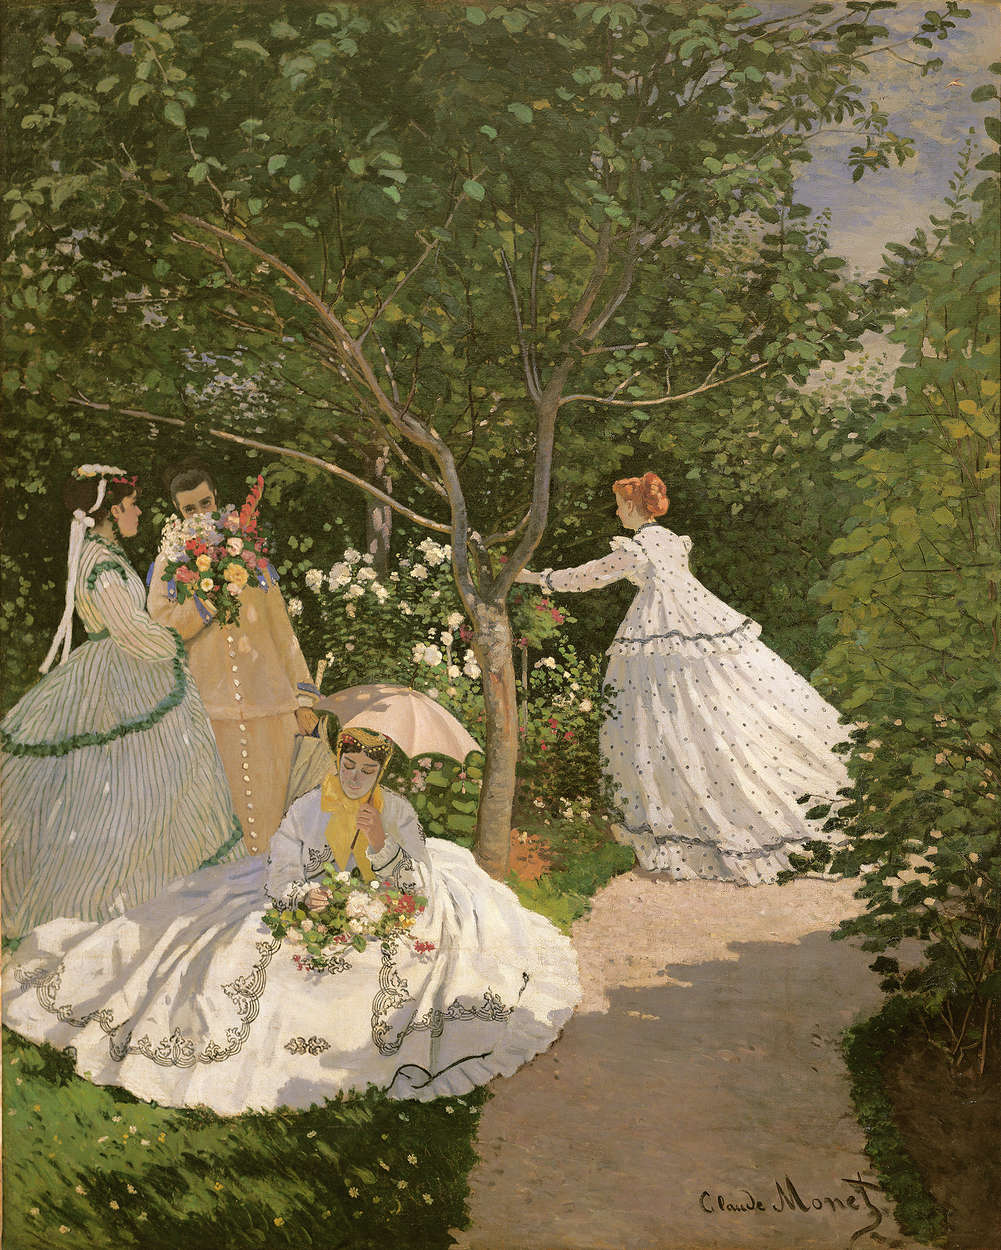             Fotomurali "Donne in giardino" di Claude Monet
        